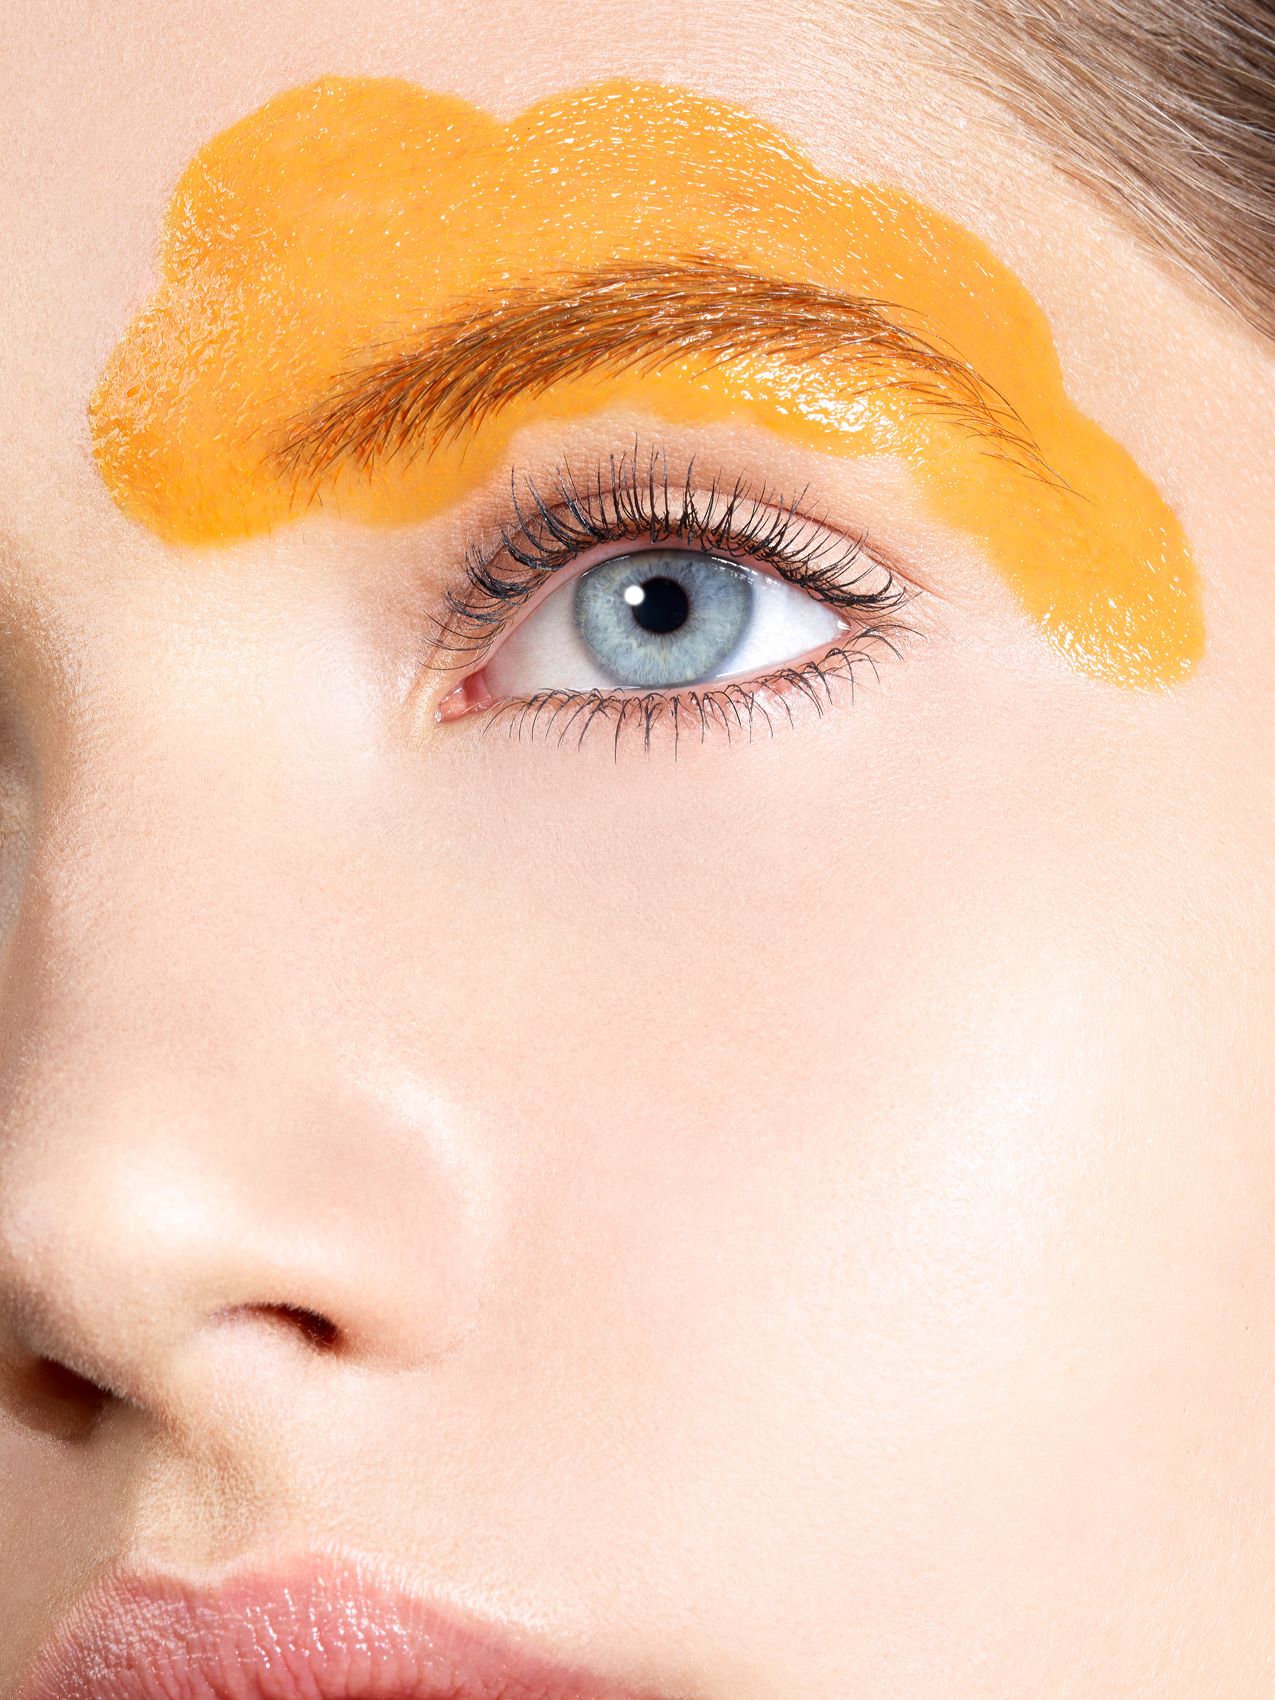 Musilek-Stan-Eyebrow-Makeup-Yellow-Eye-Paint-Cloud-Inspiration-Photography 